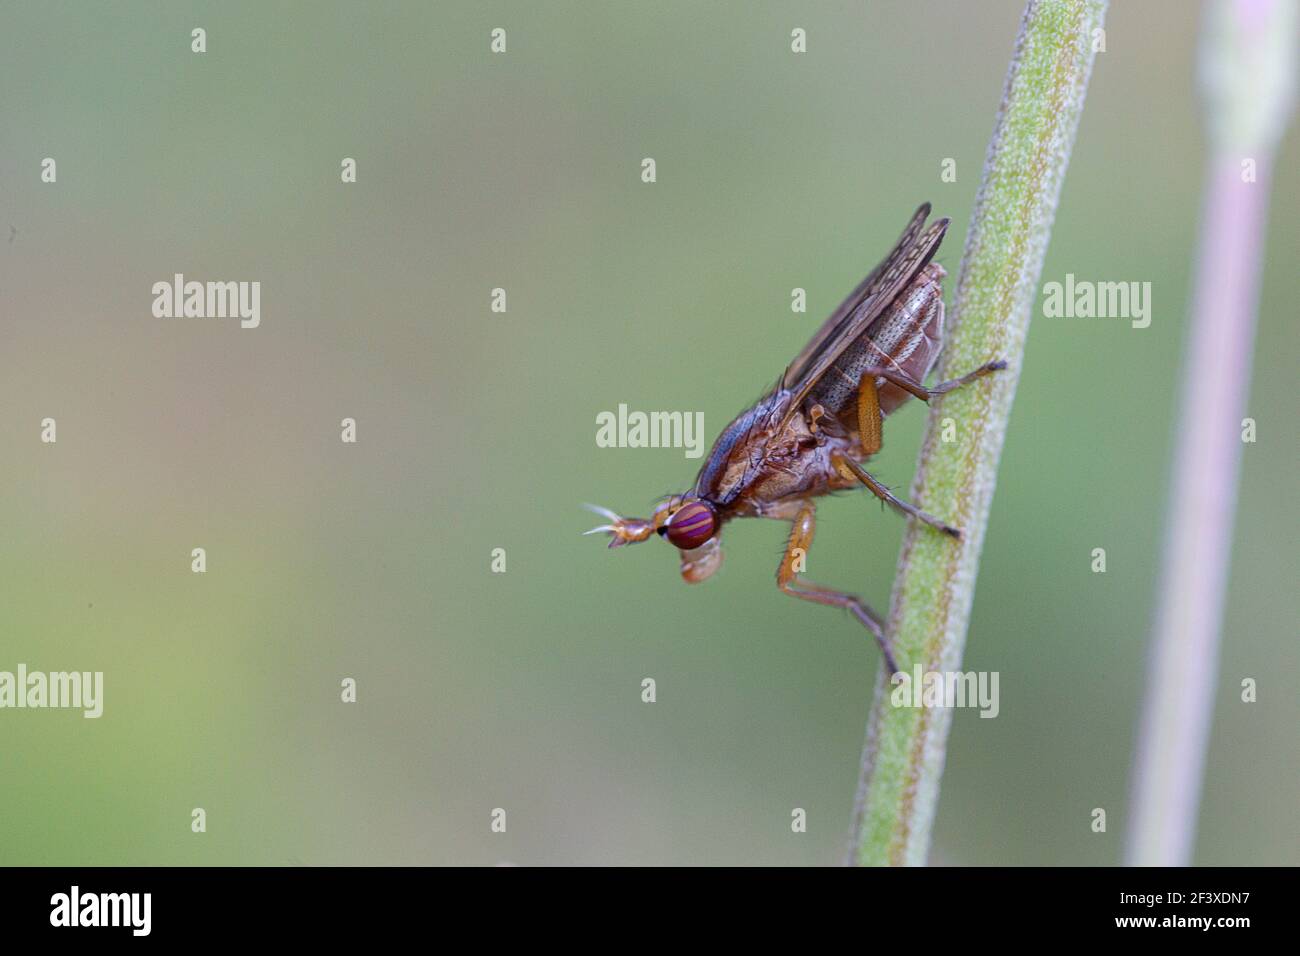 Fly Diptera in closeup or macro view Stock Photo